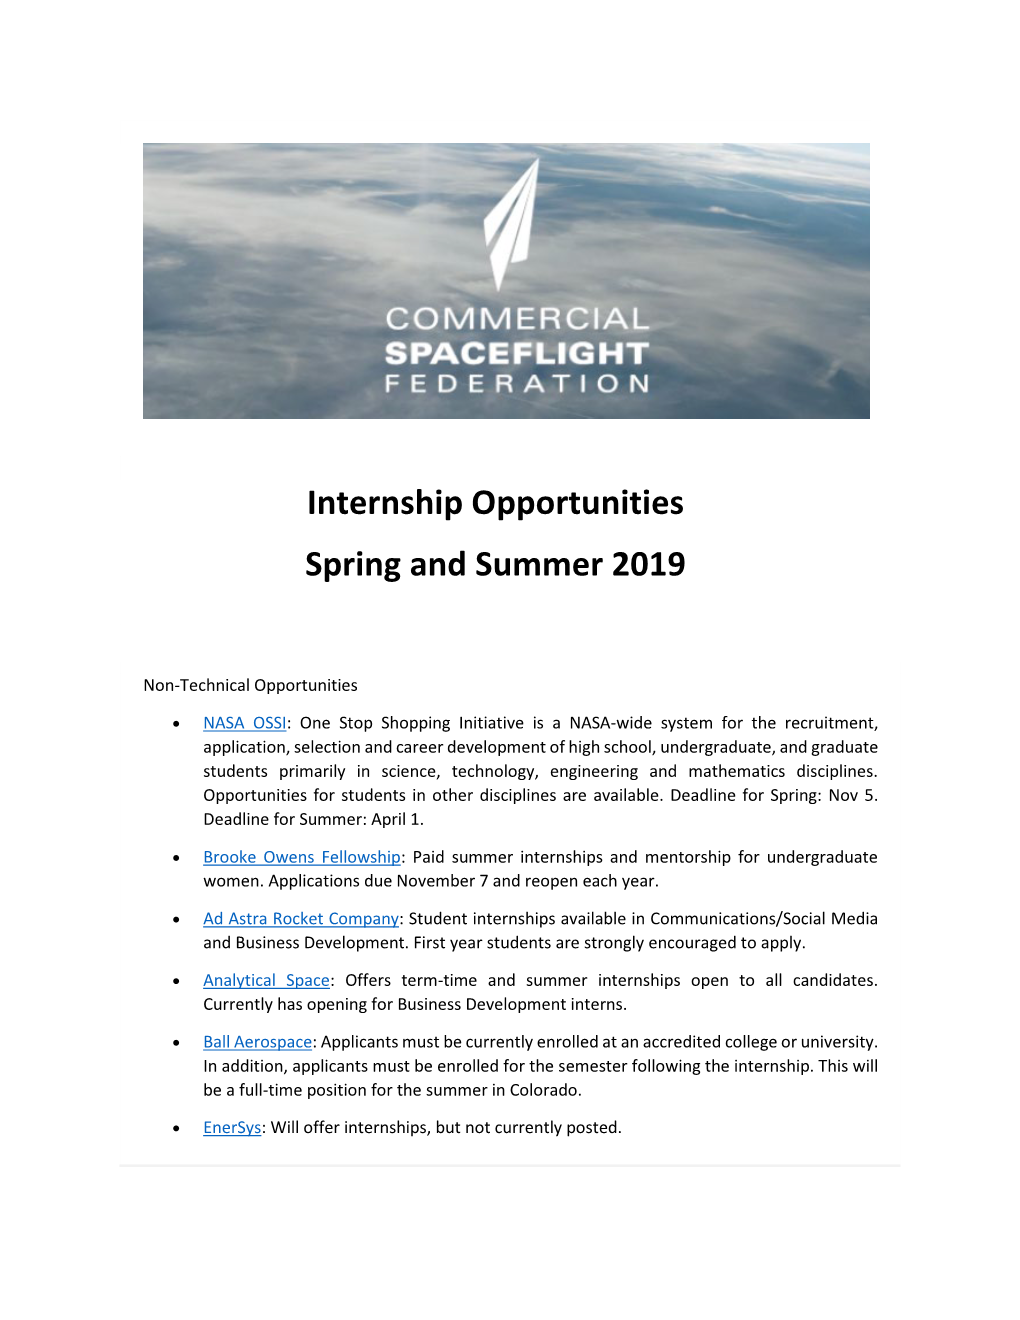 Internship Opportunities Spring and Summer 2019